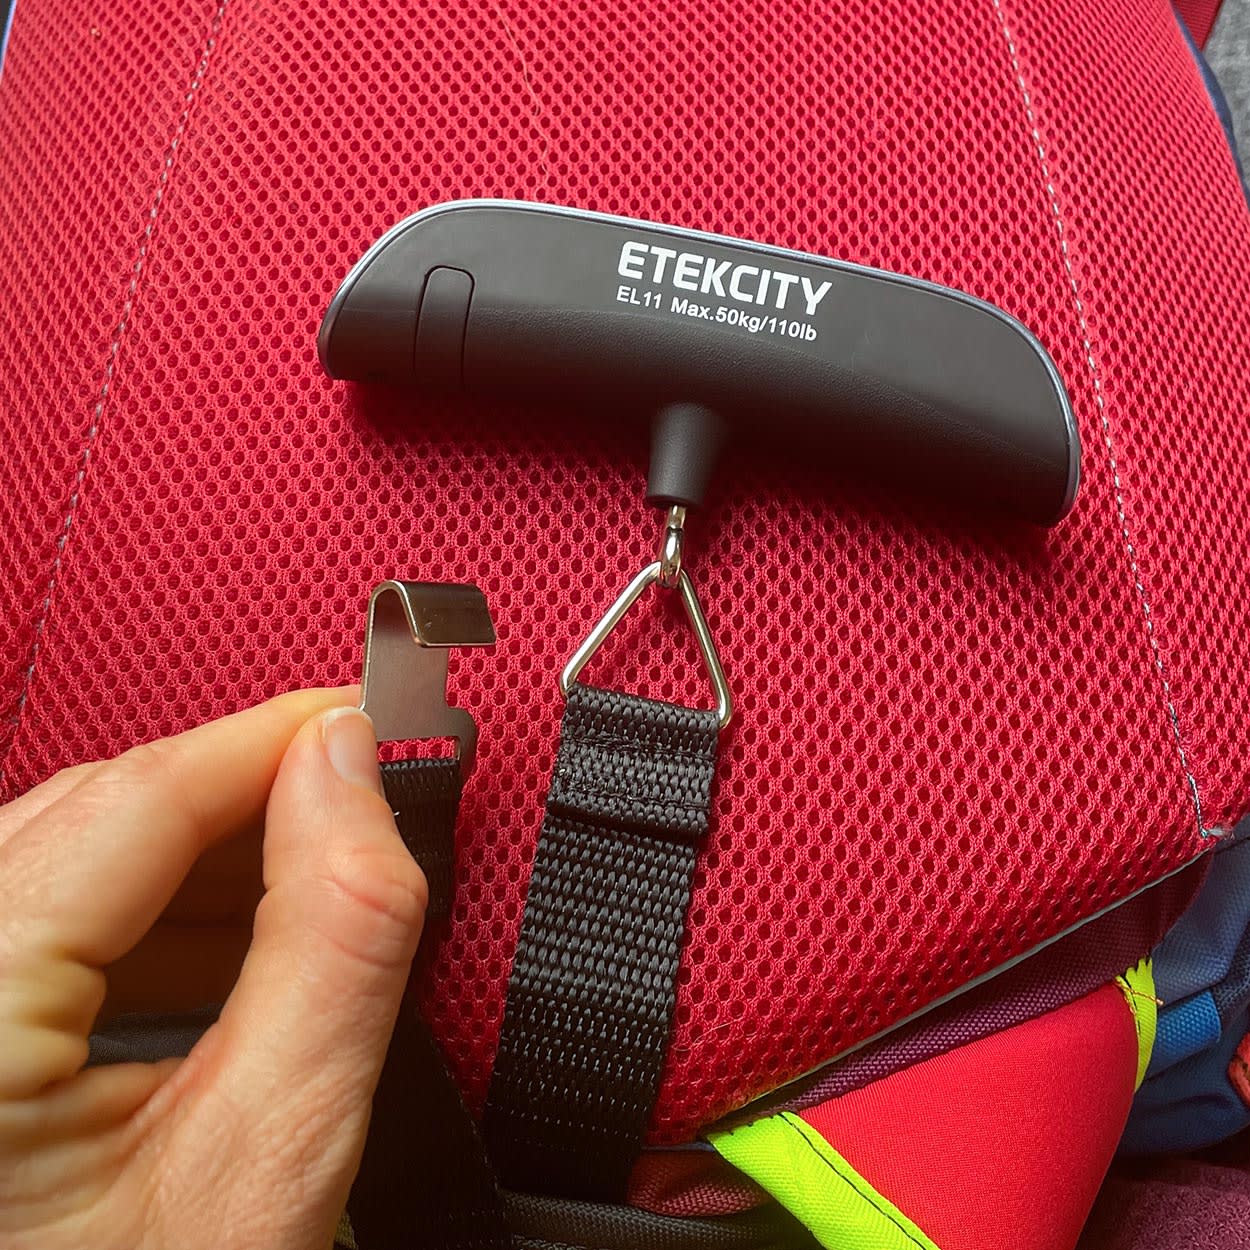 Etekcity Luggage Scale, Travel Essentials, Digital Weight Scales